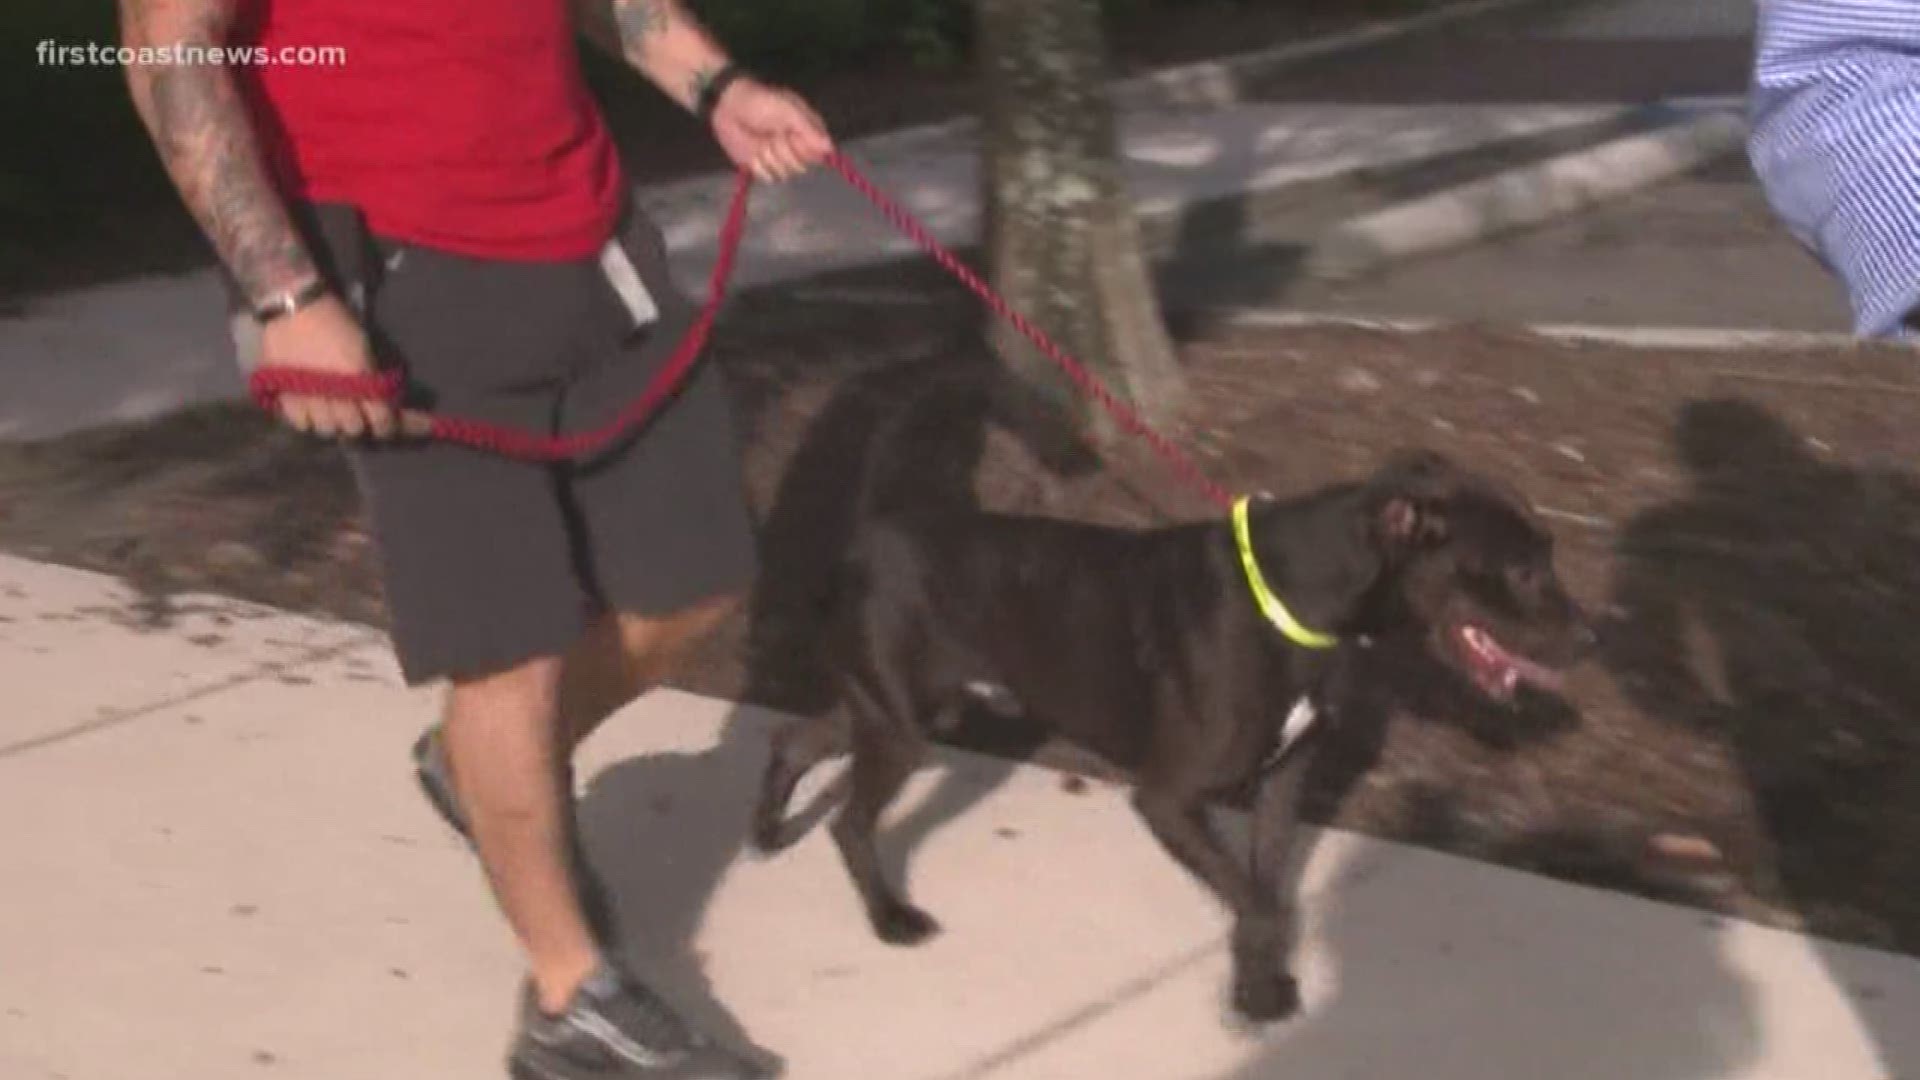 The free pet adoption event ensures Jacksonville remains a "no-kill" community.